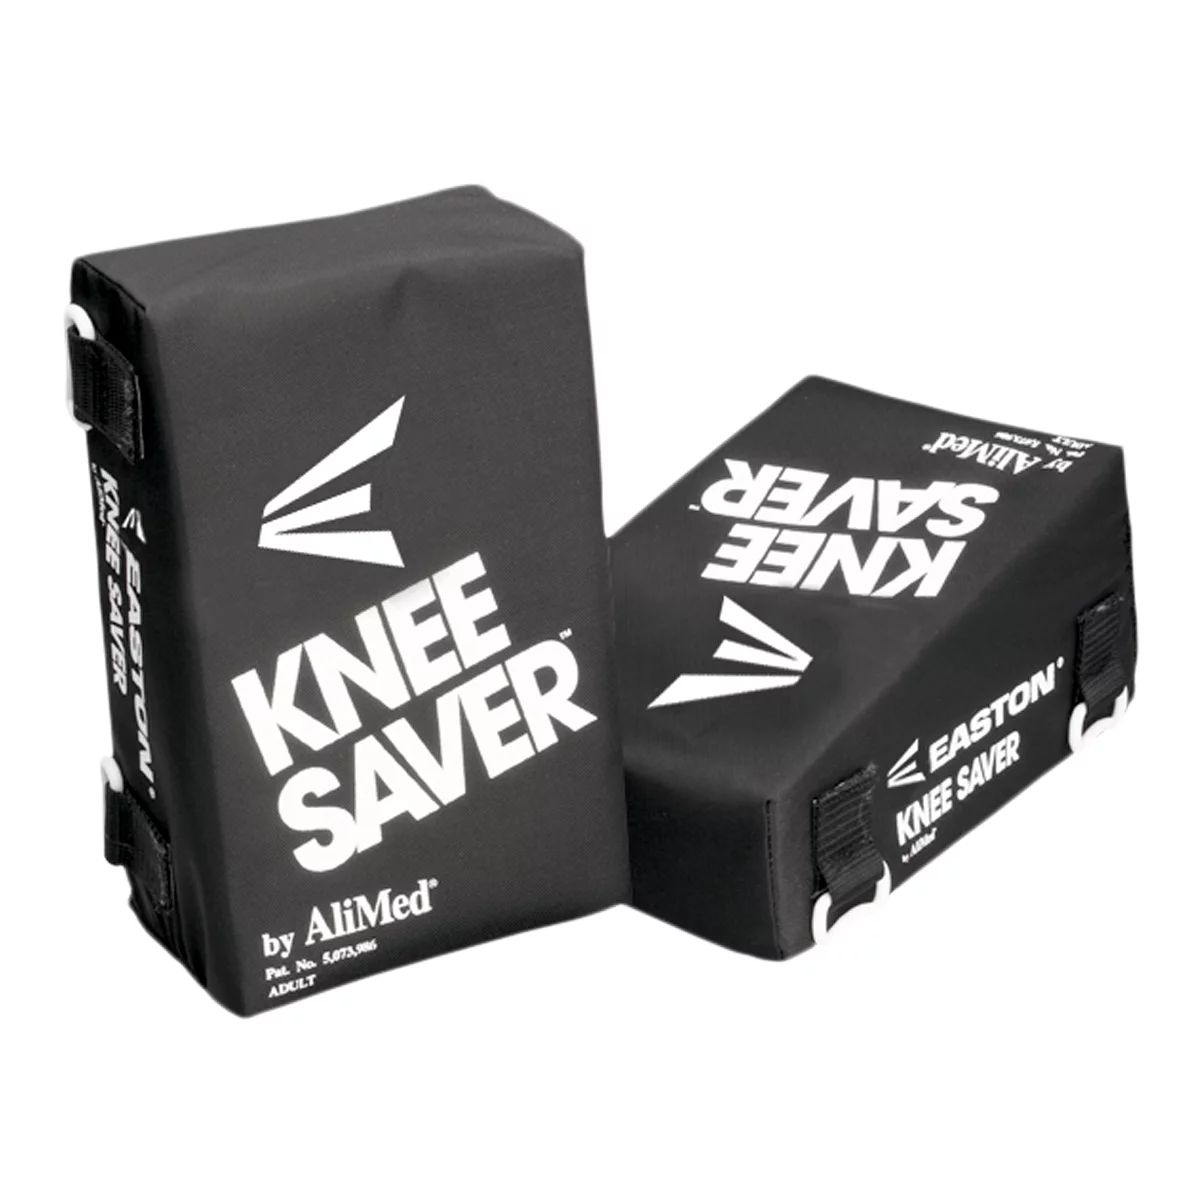 Image of Easton Knee Saver - Large Black